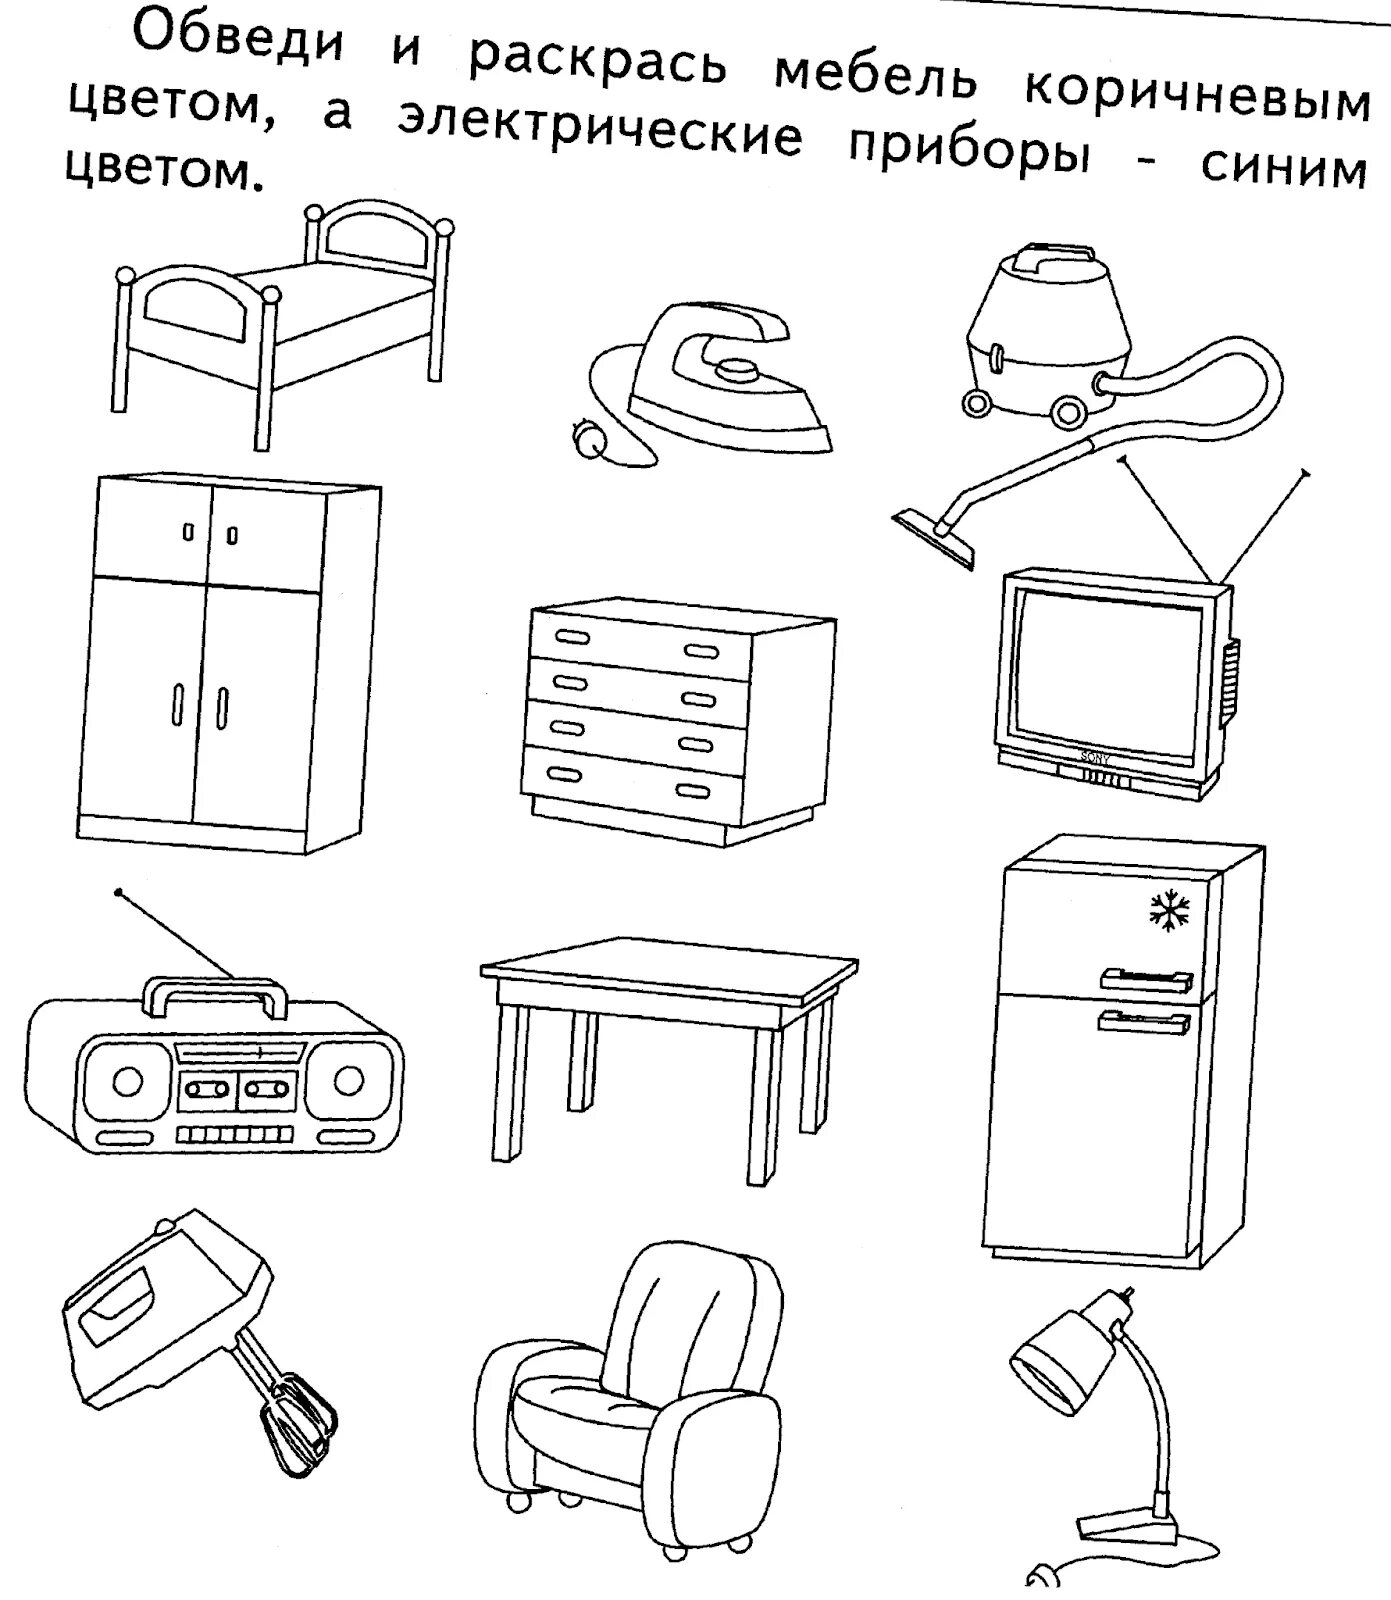 Furniture appliances #3